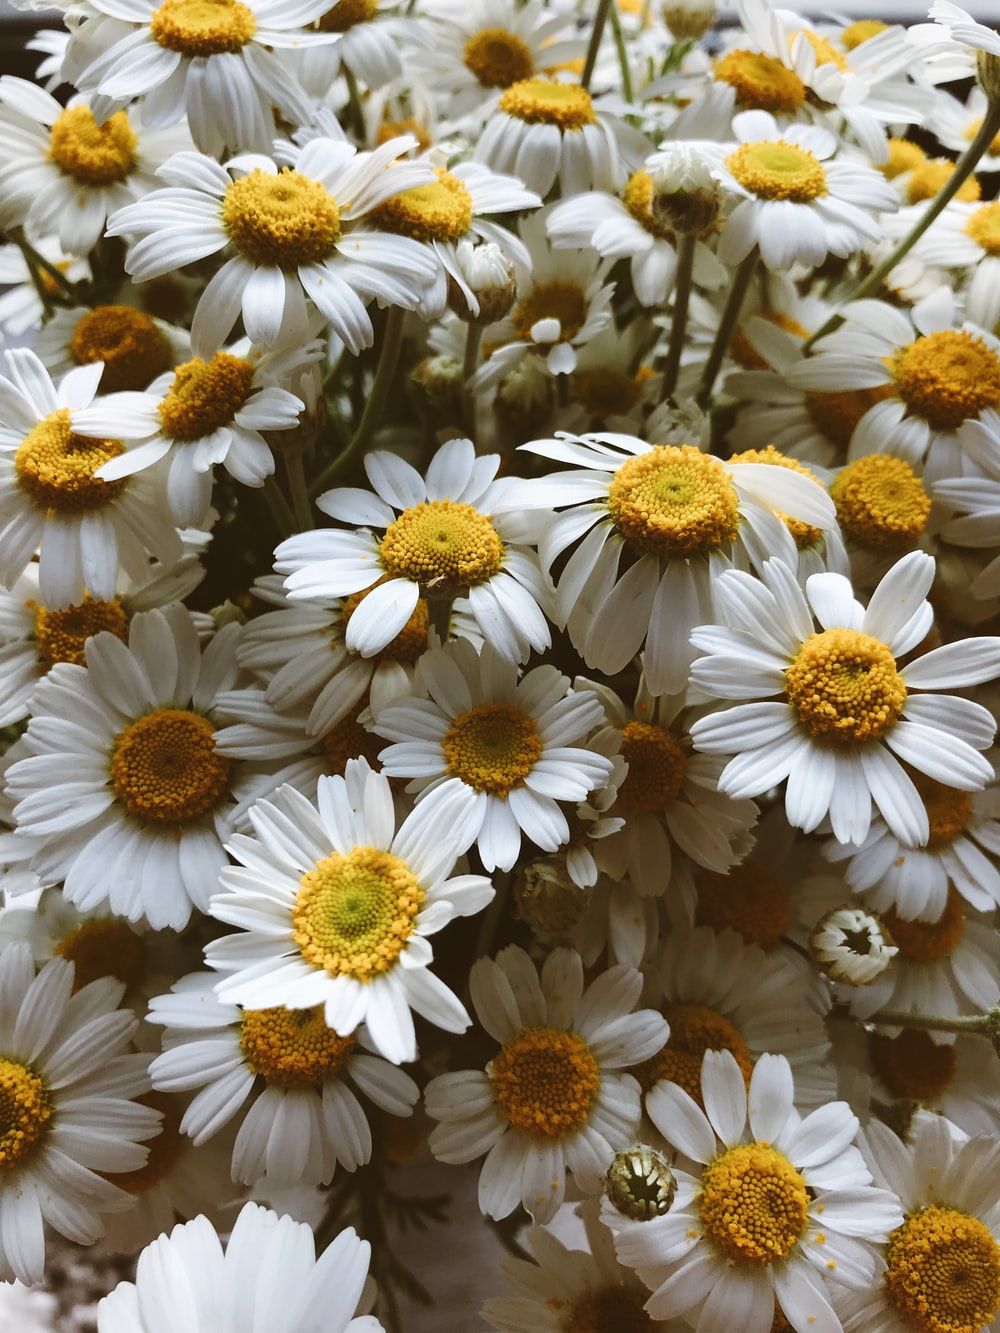 white daisy flowers during daytime .com